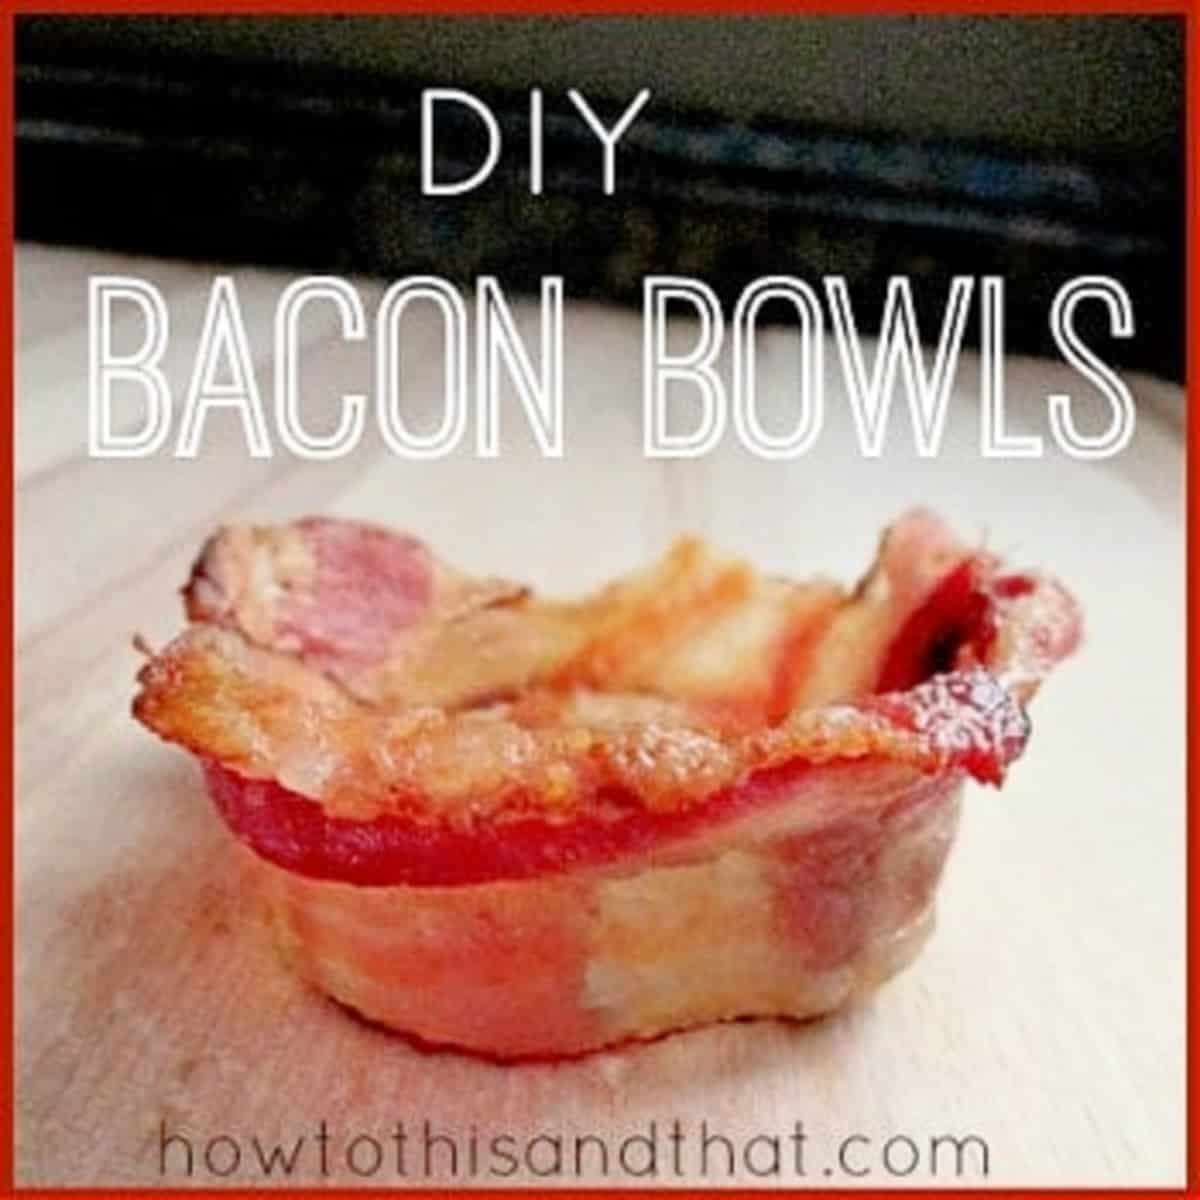 diy homemade bacon bowls using a muffin tin.